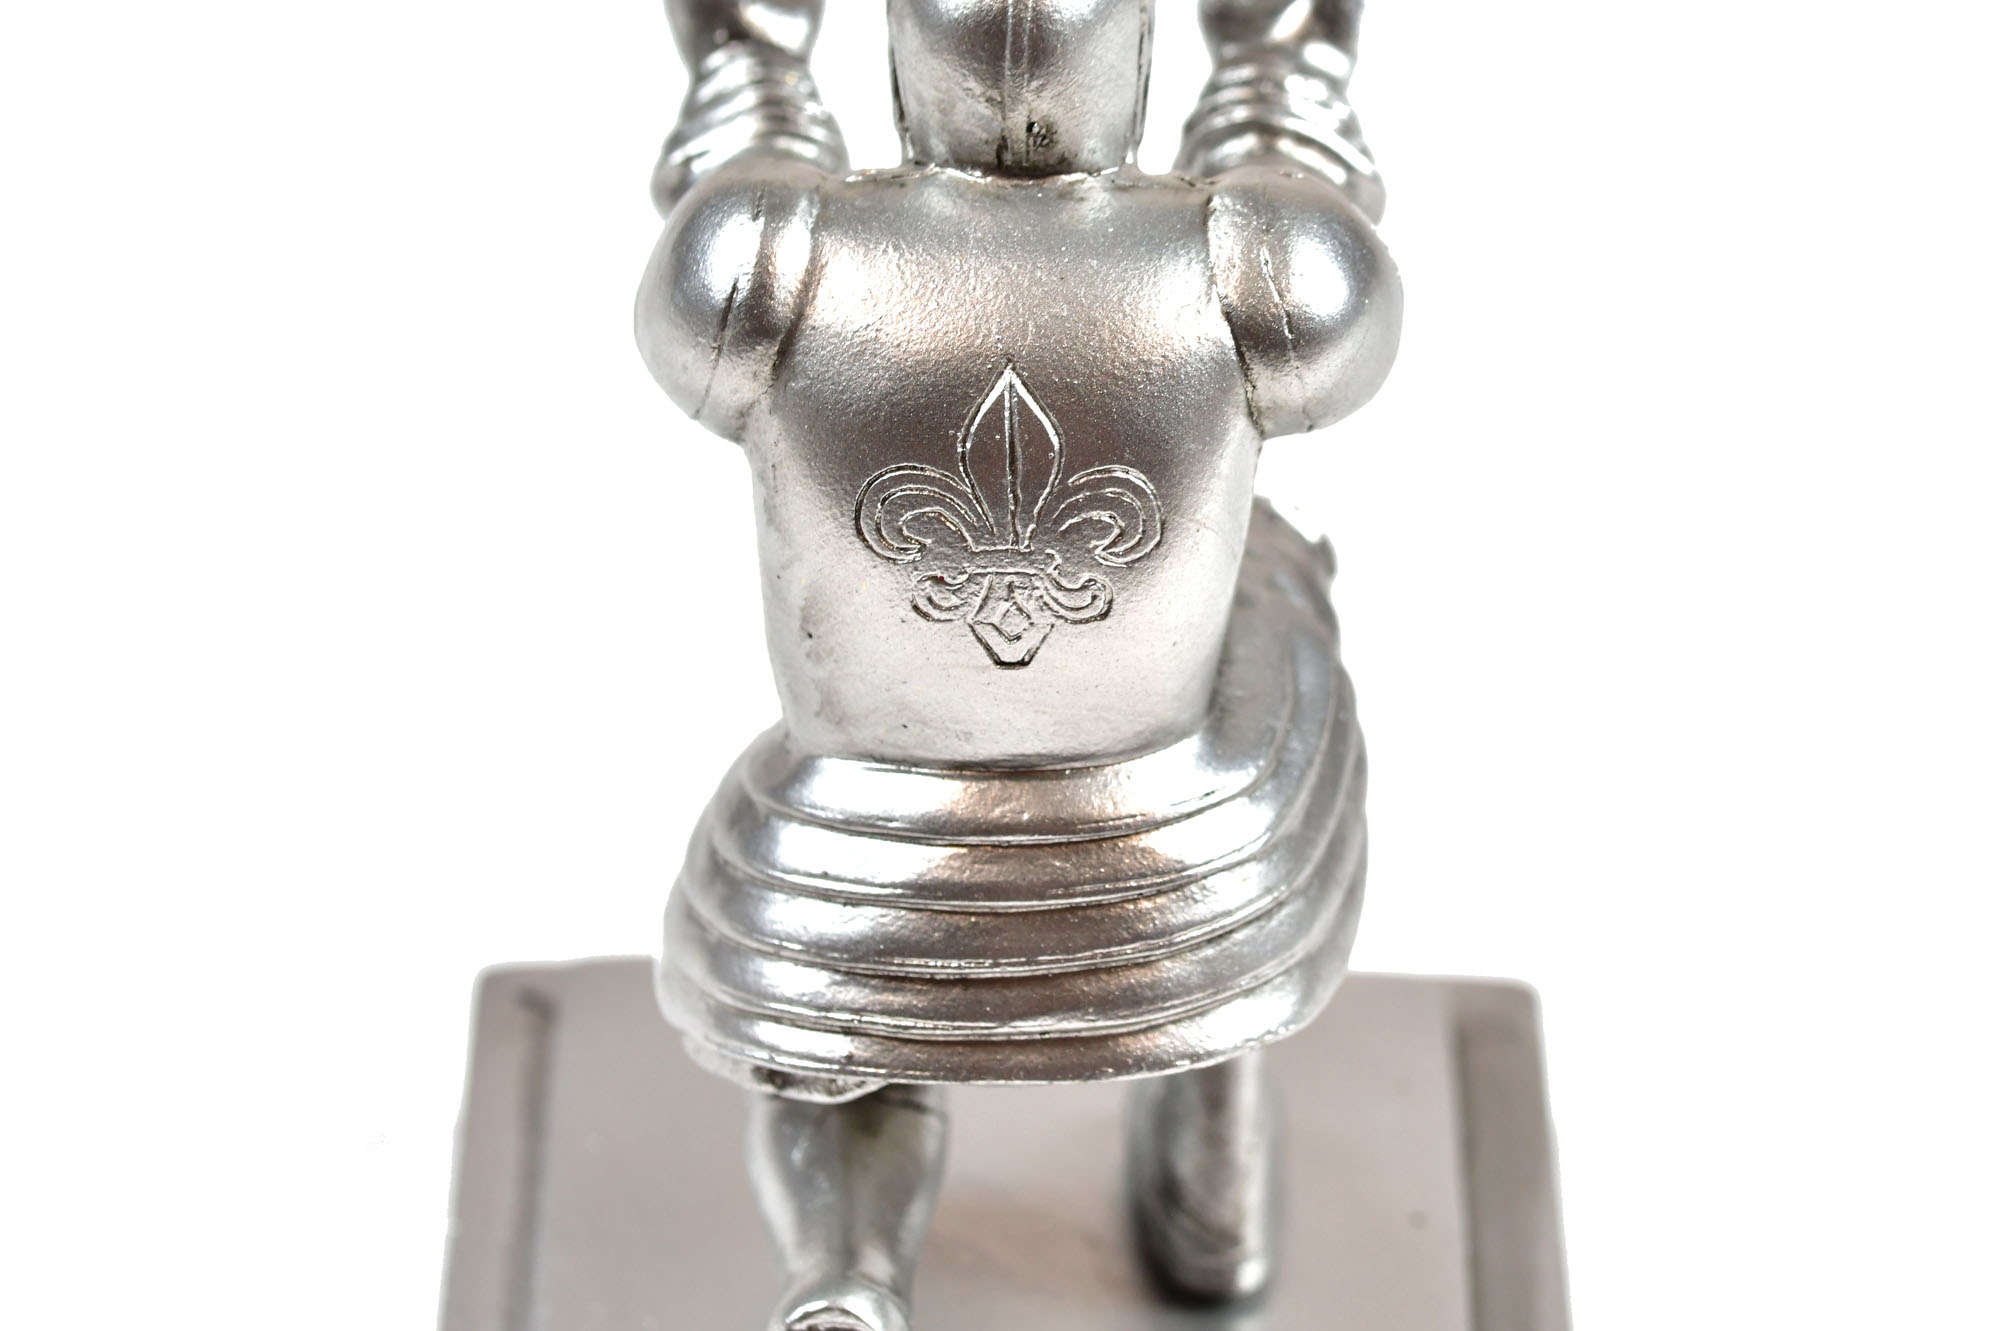 Knight figurine - holder for letter opener, kneeling medieval knight